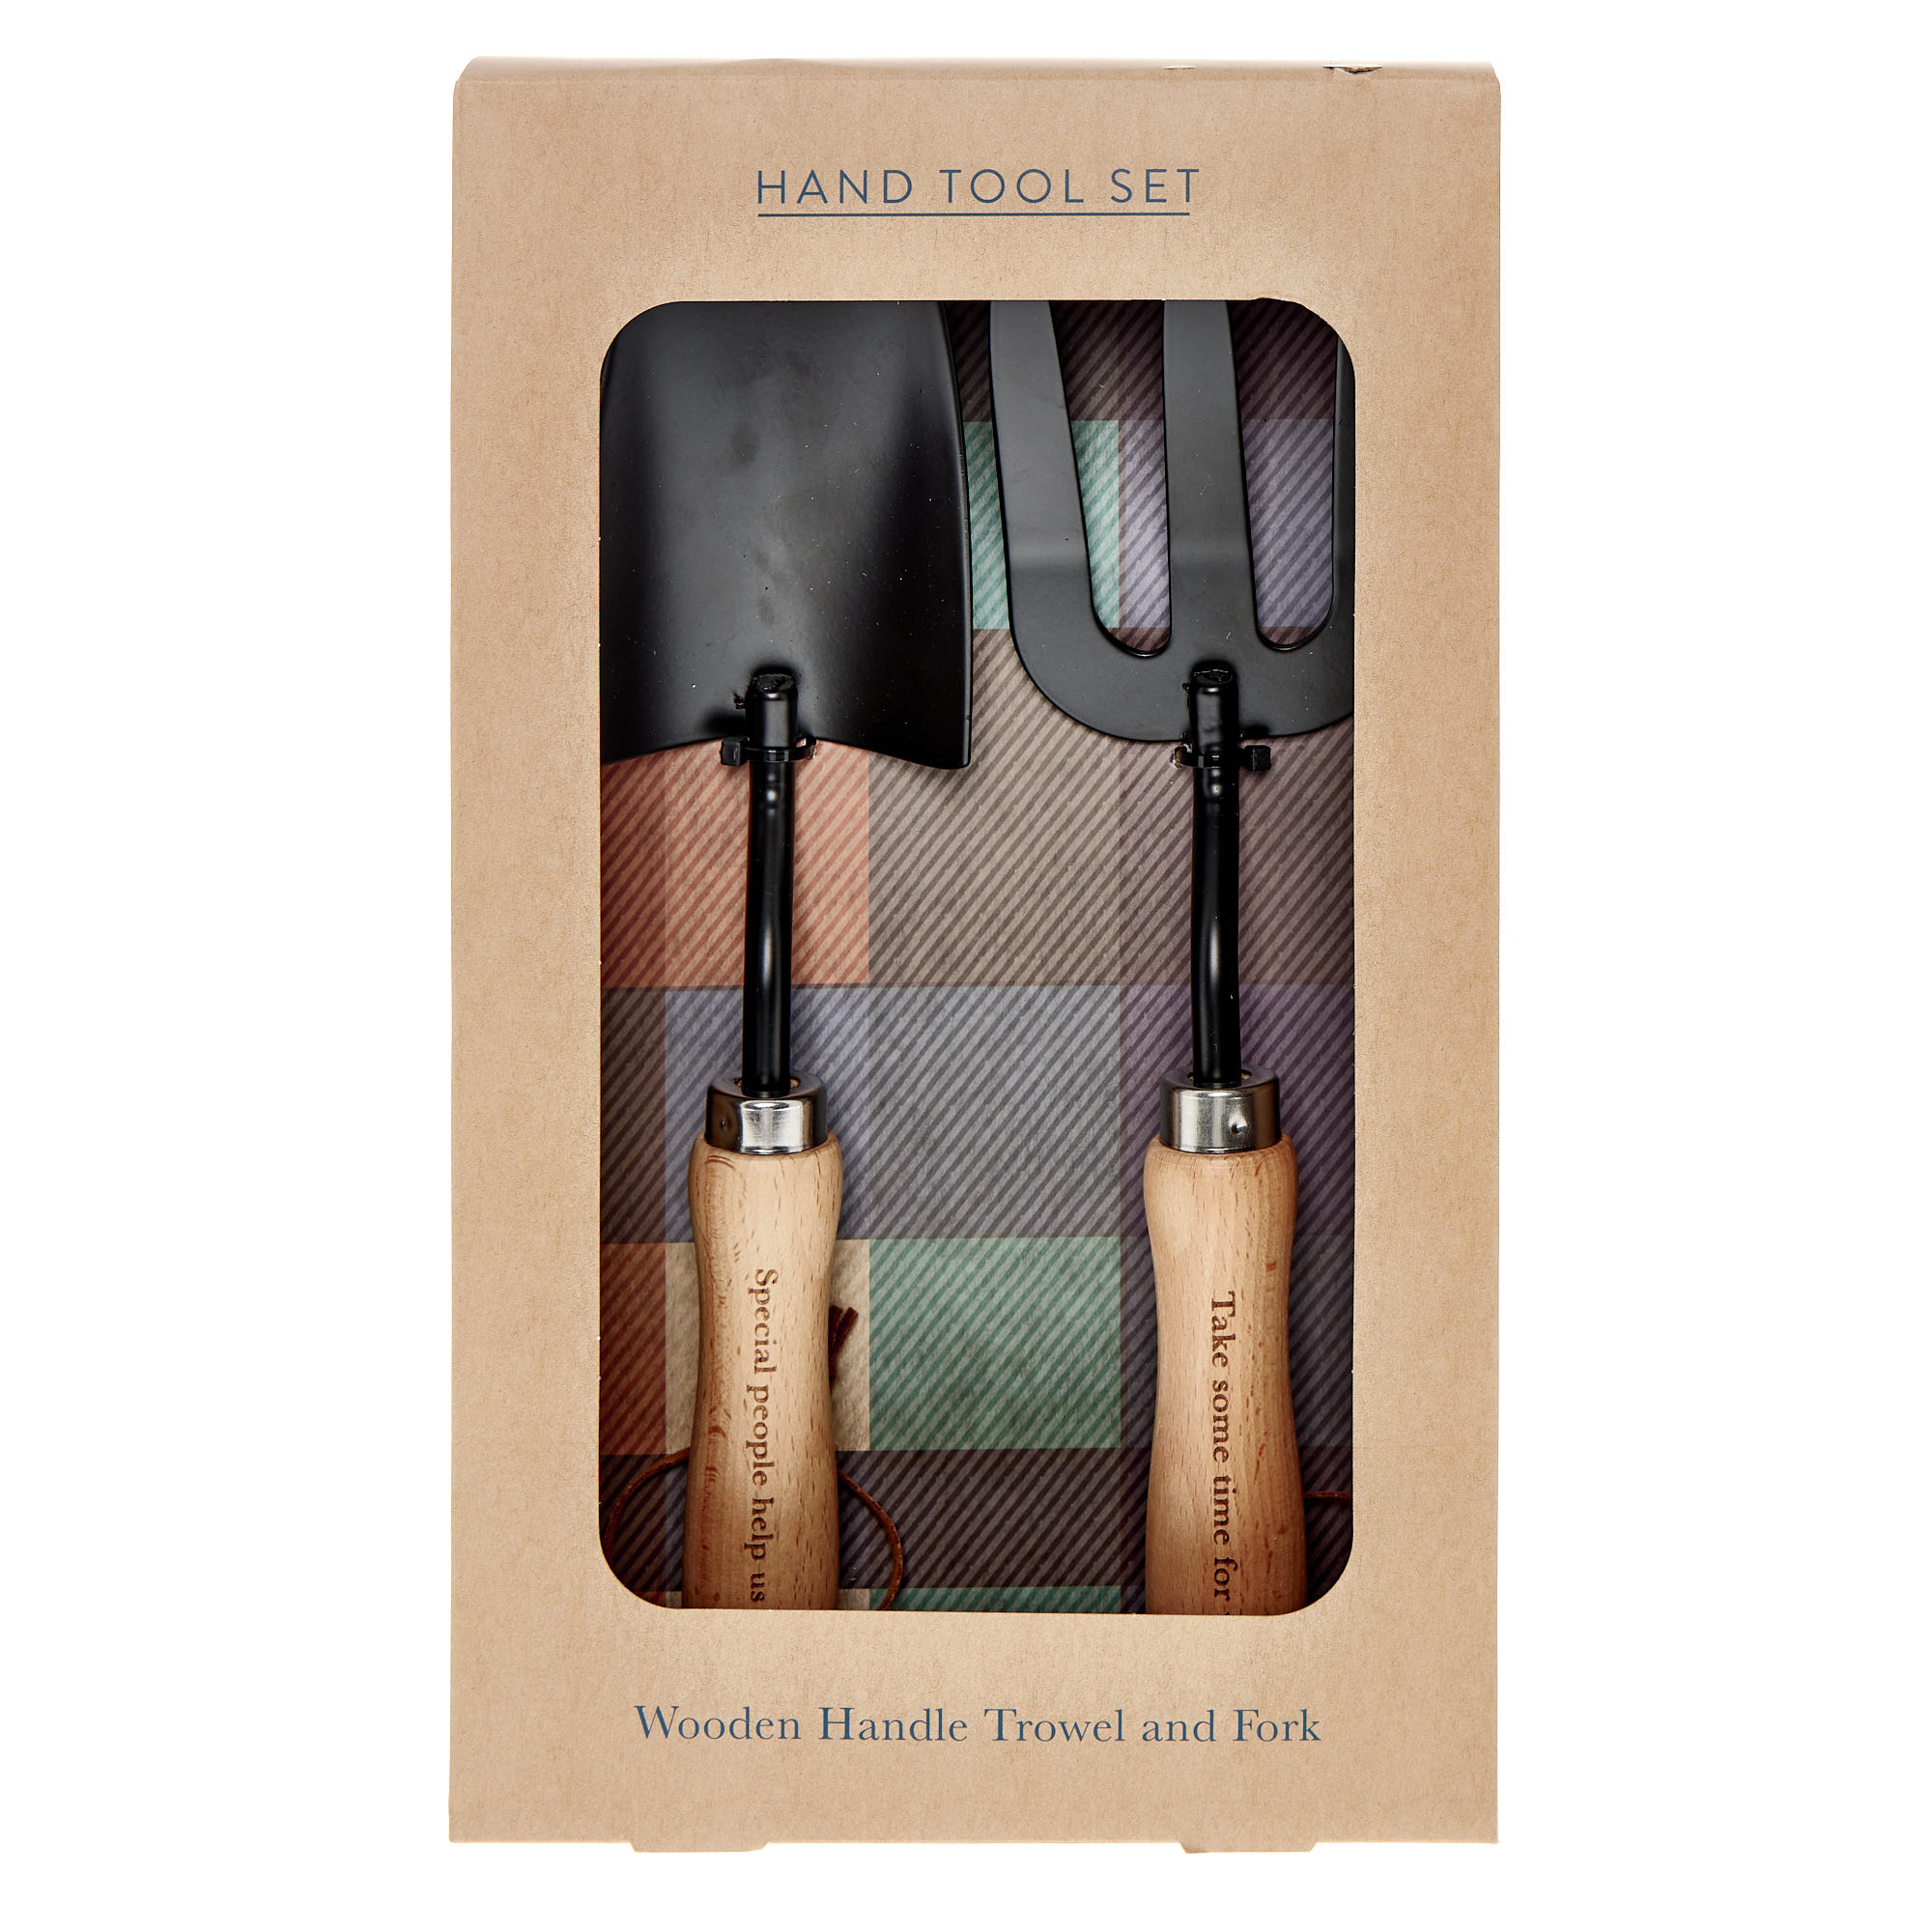 Wooden Handle Trowel & Fork Hand Tool Set